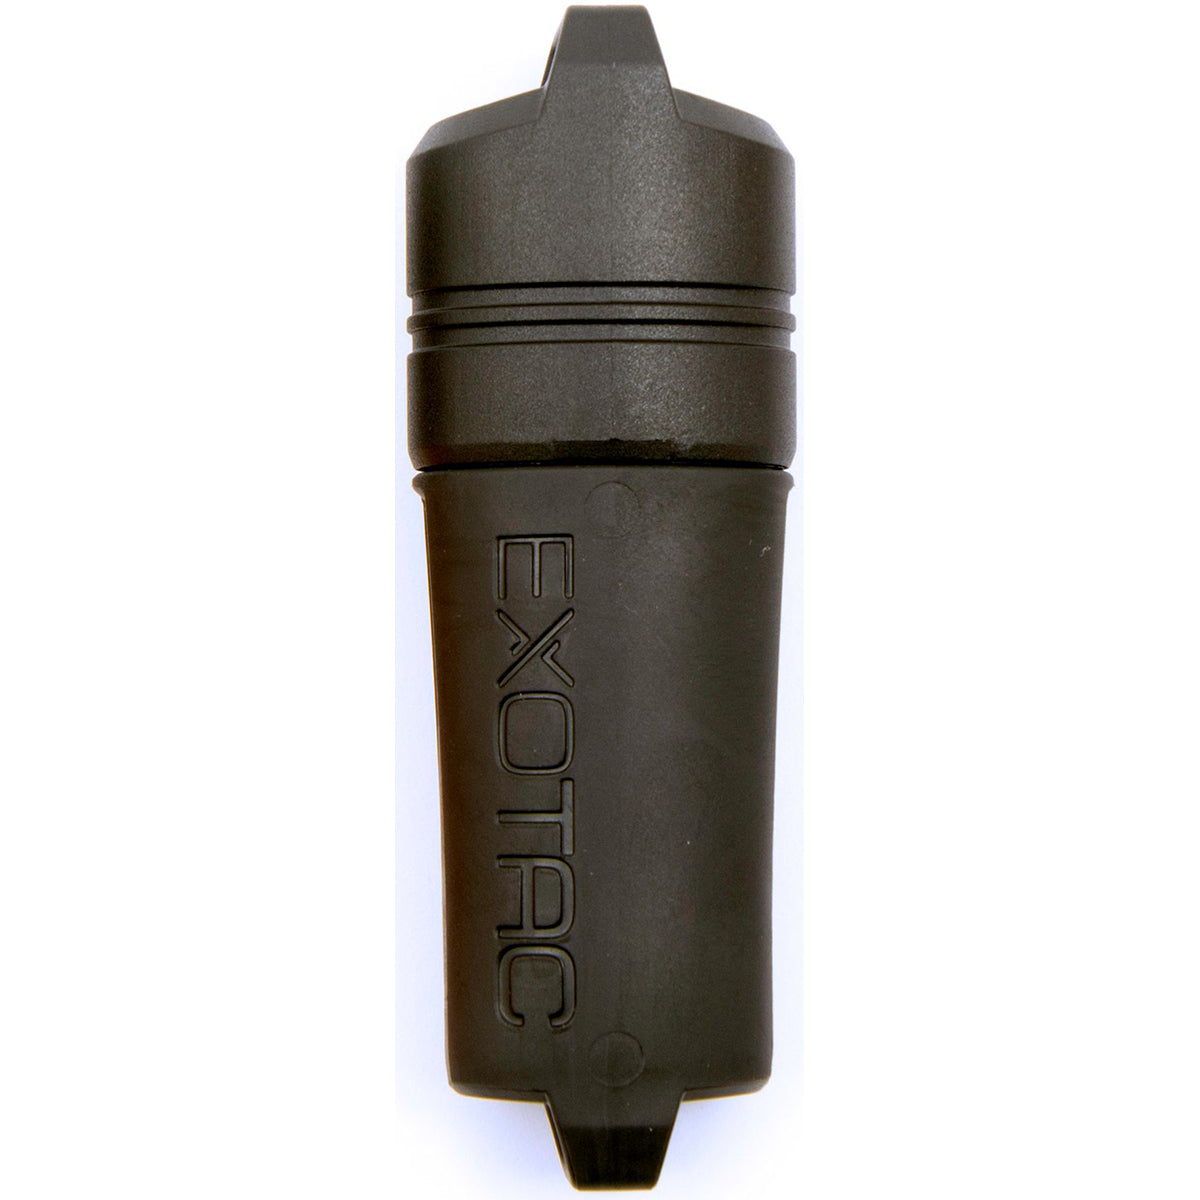 Exotac fireSLEEVE Ruggedized Waterproof Lighter Case with Lighter Exotac